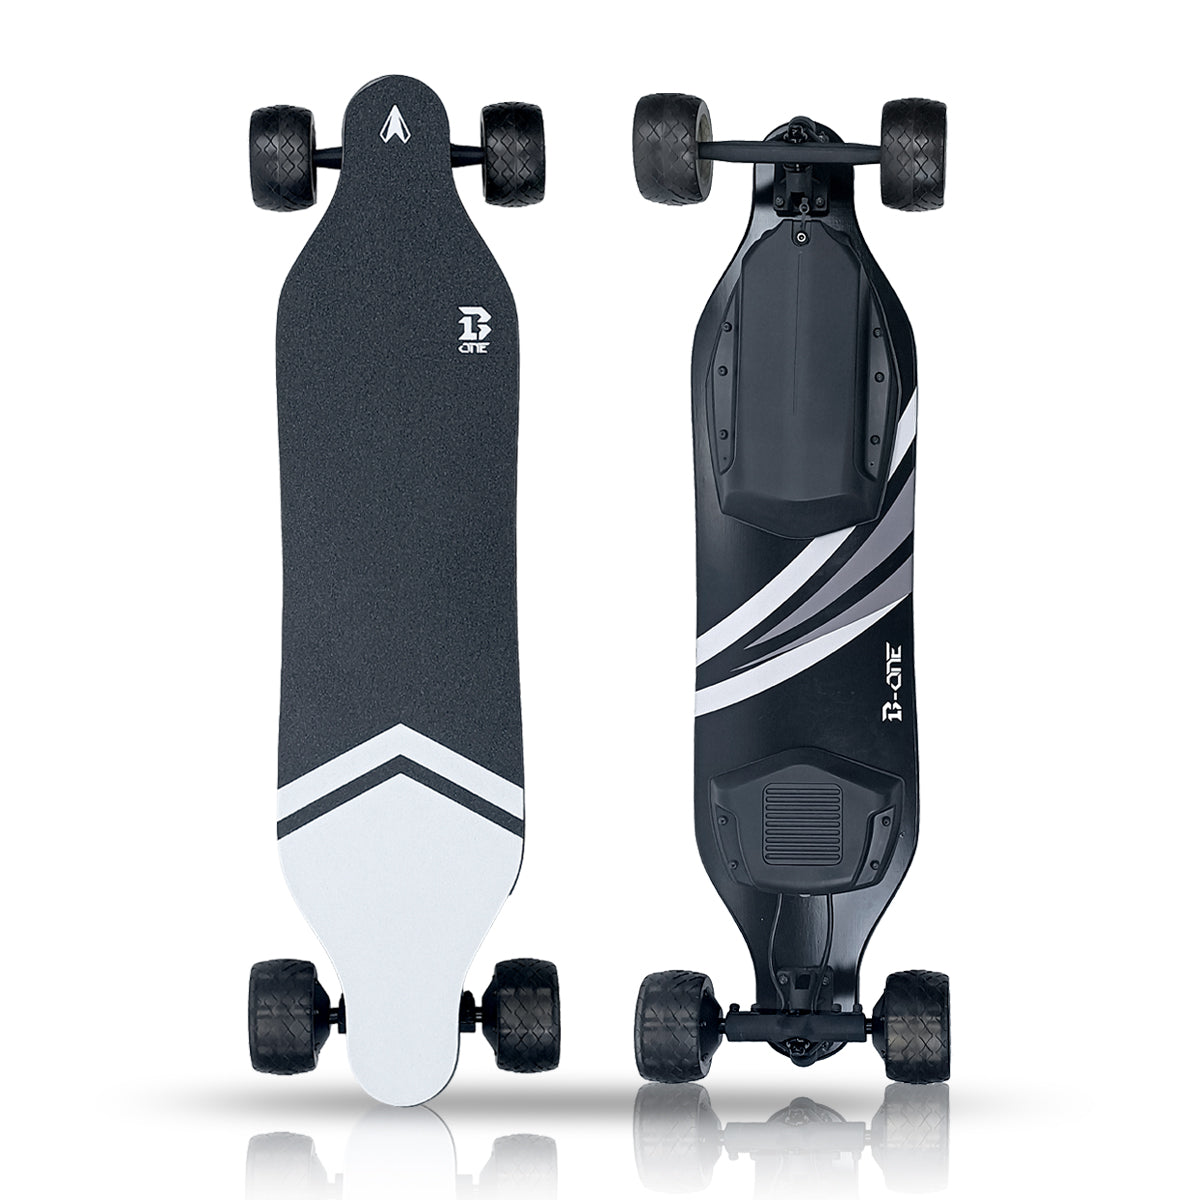 Falcon Electric Skateboard